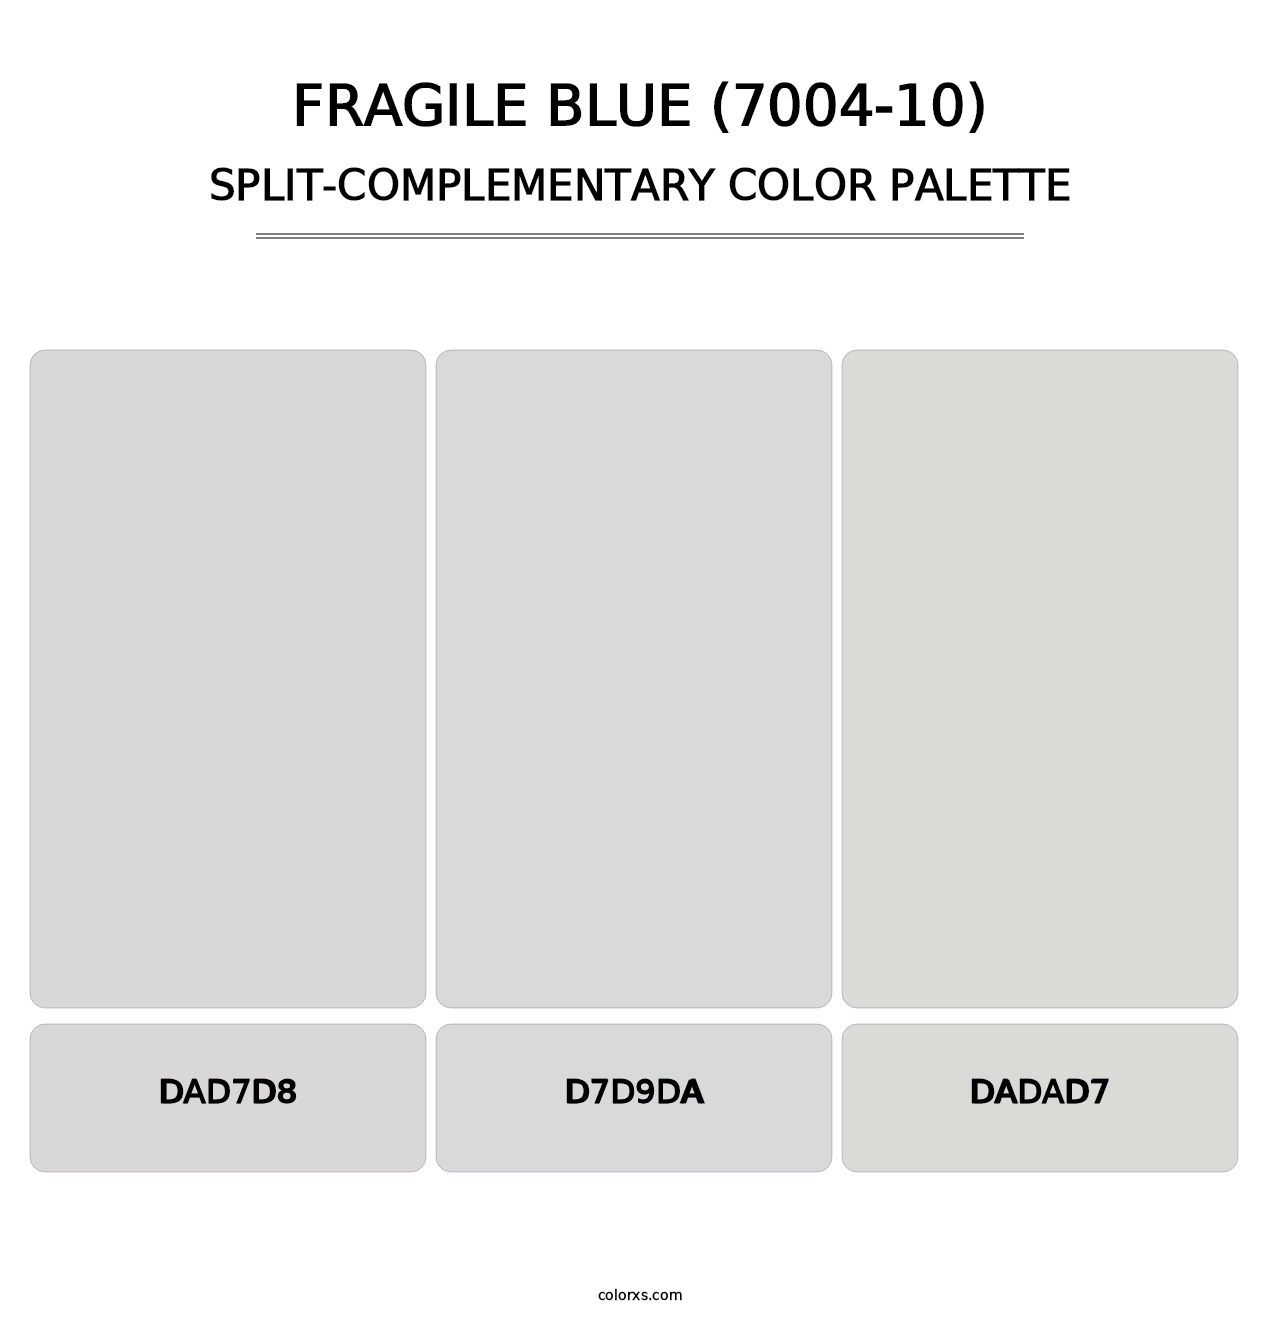 Fragile Blue (7004-10) - Split-Complementary Color Palette